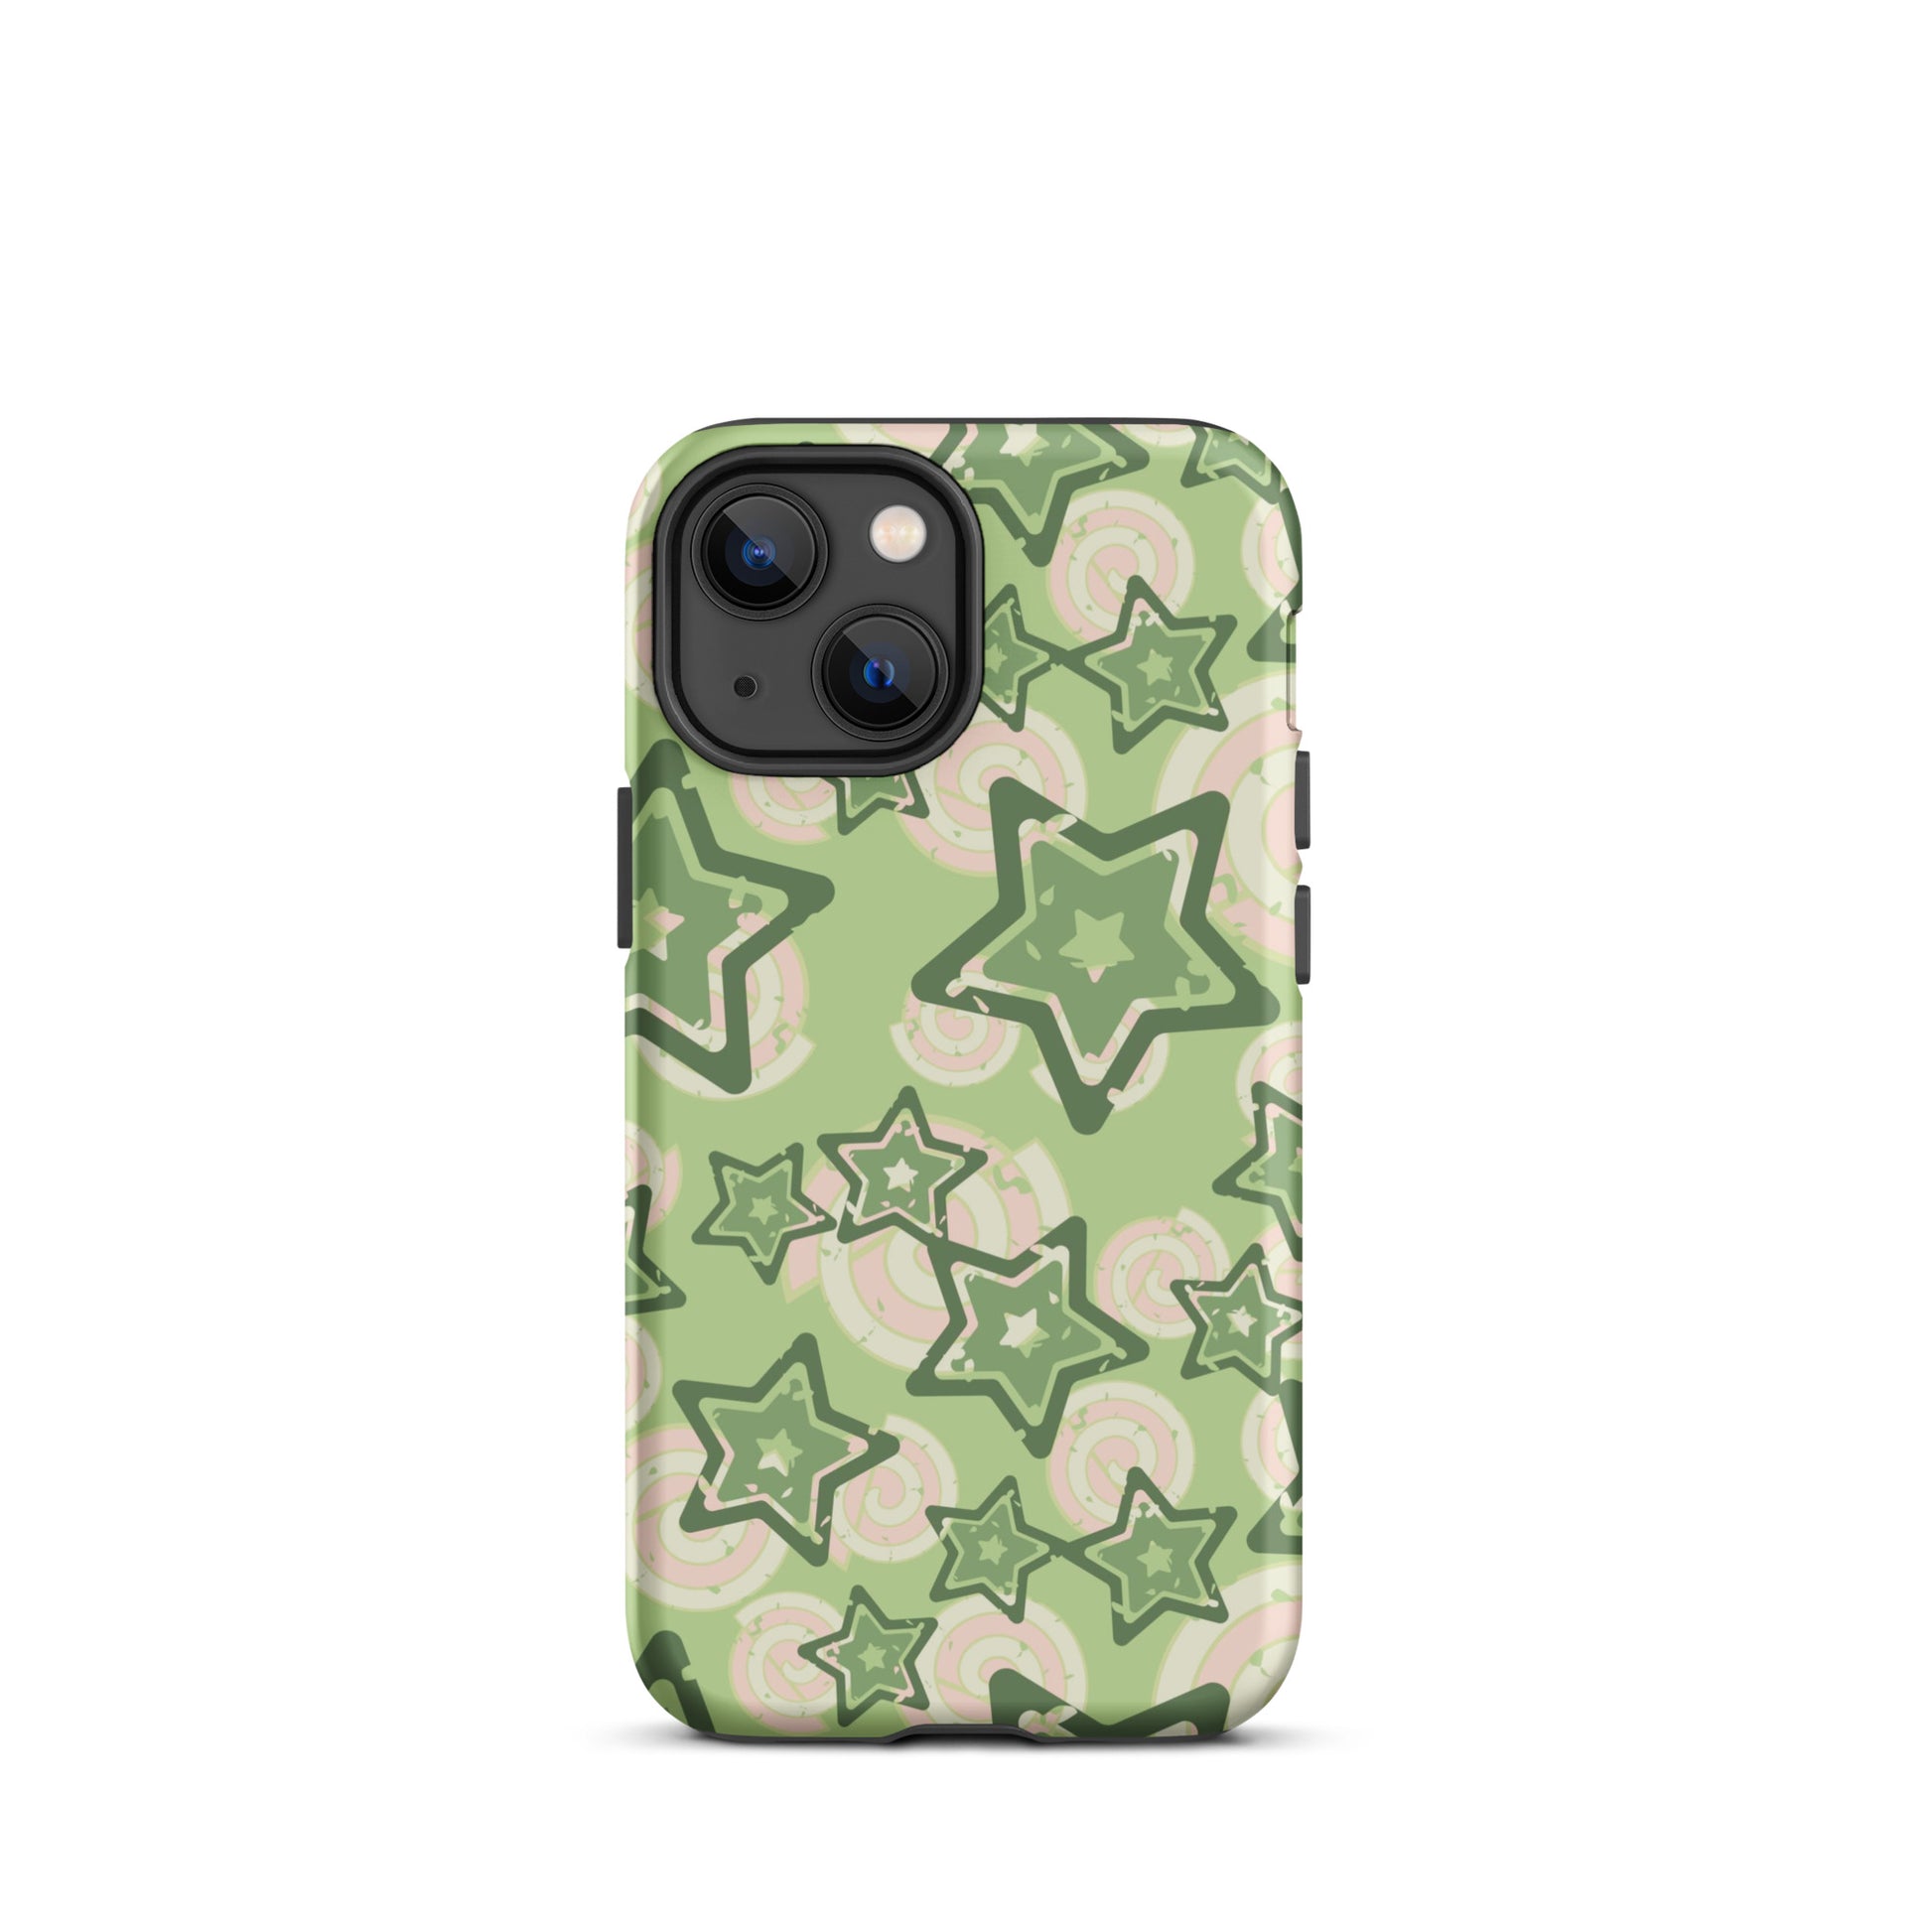 Y2K Green Star iPhone Case iPhone 13 mini Matte